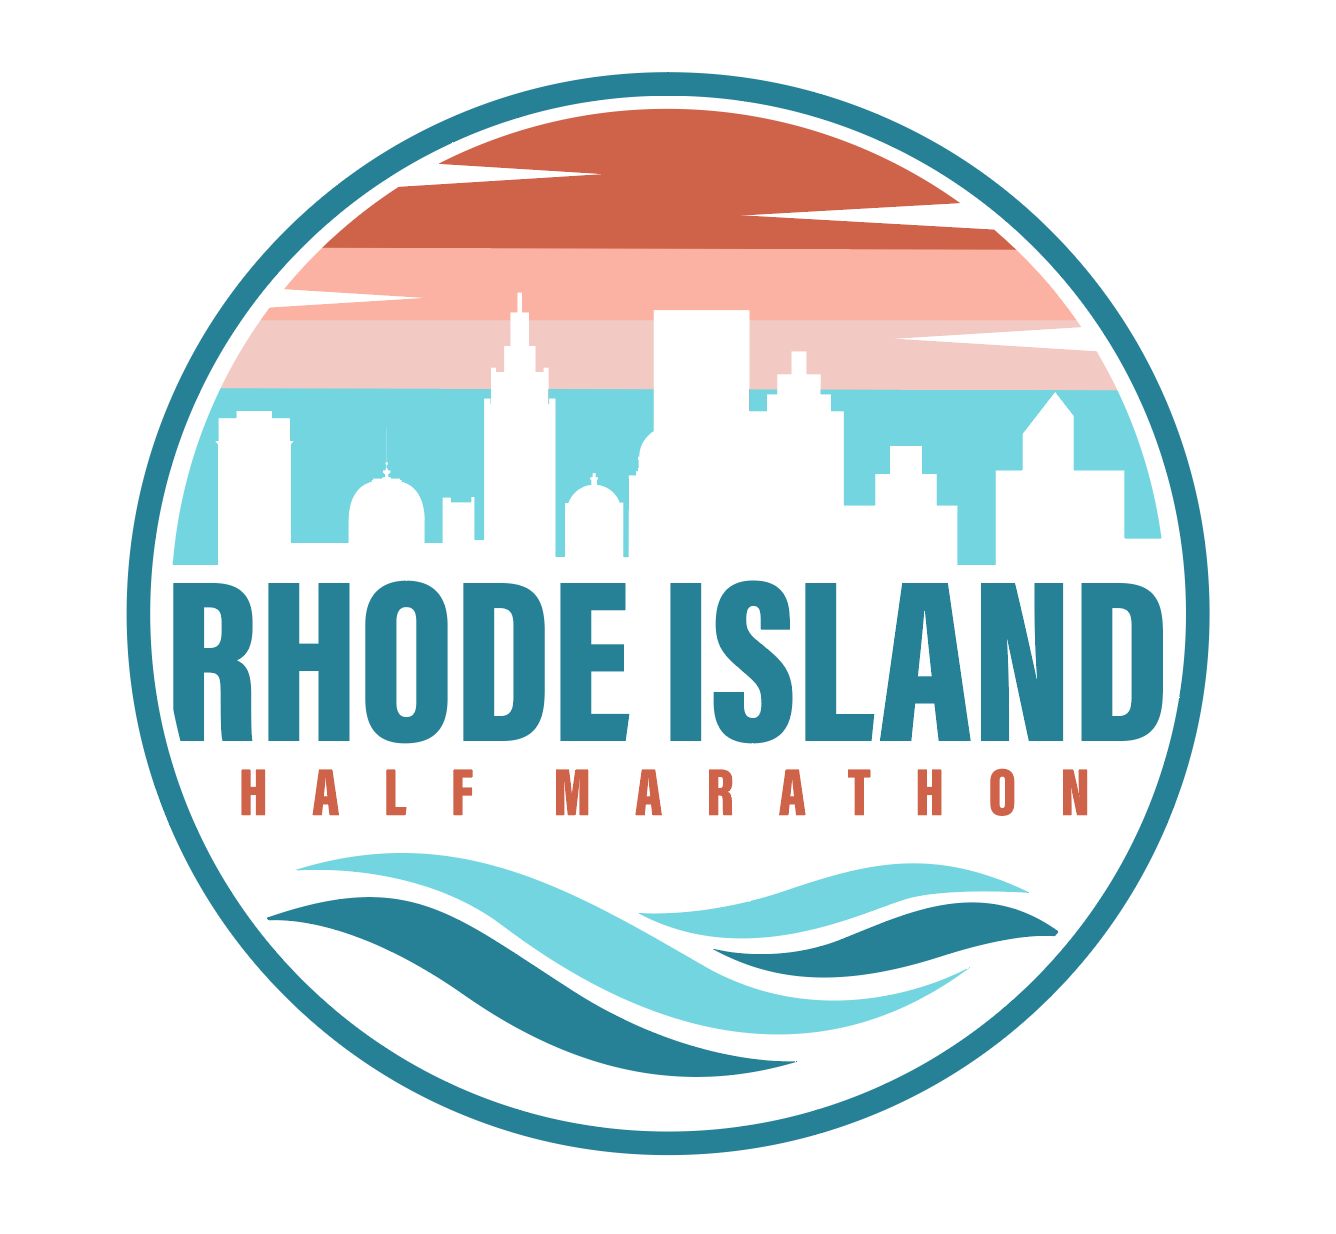 Rhode Island Half Marathon logo on RaceRaves